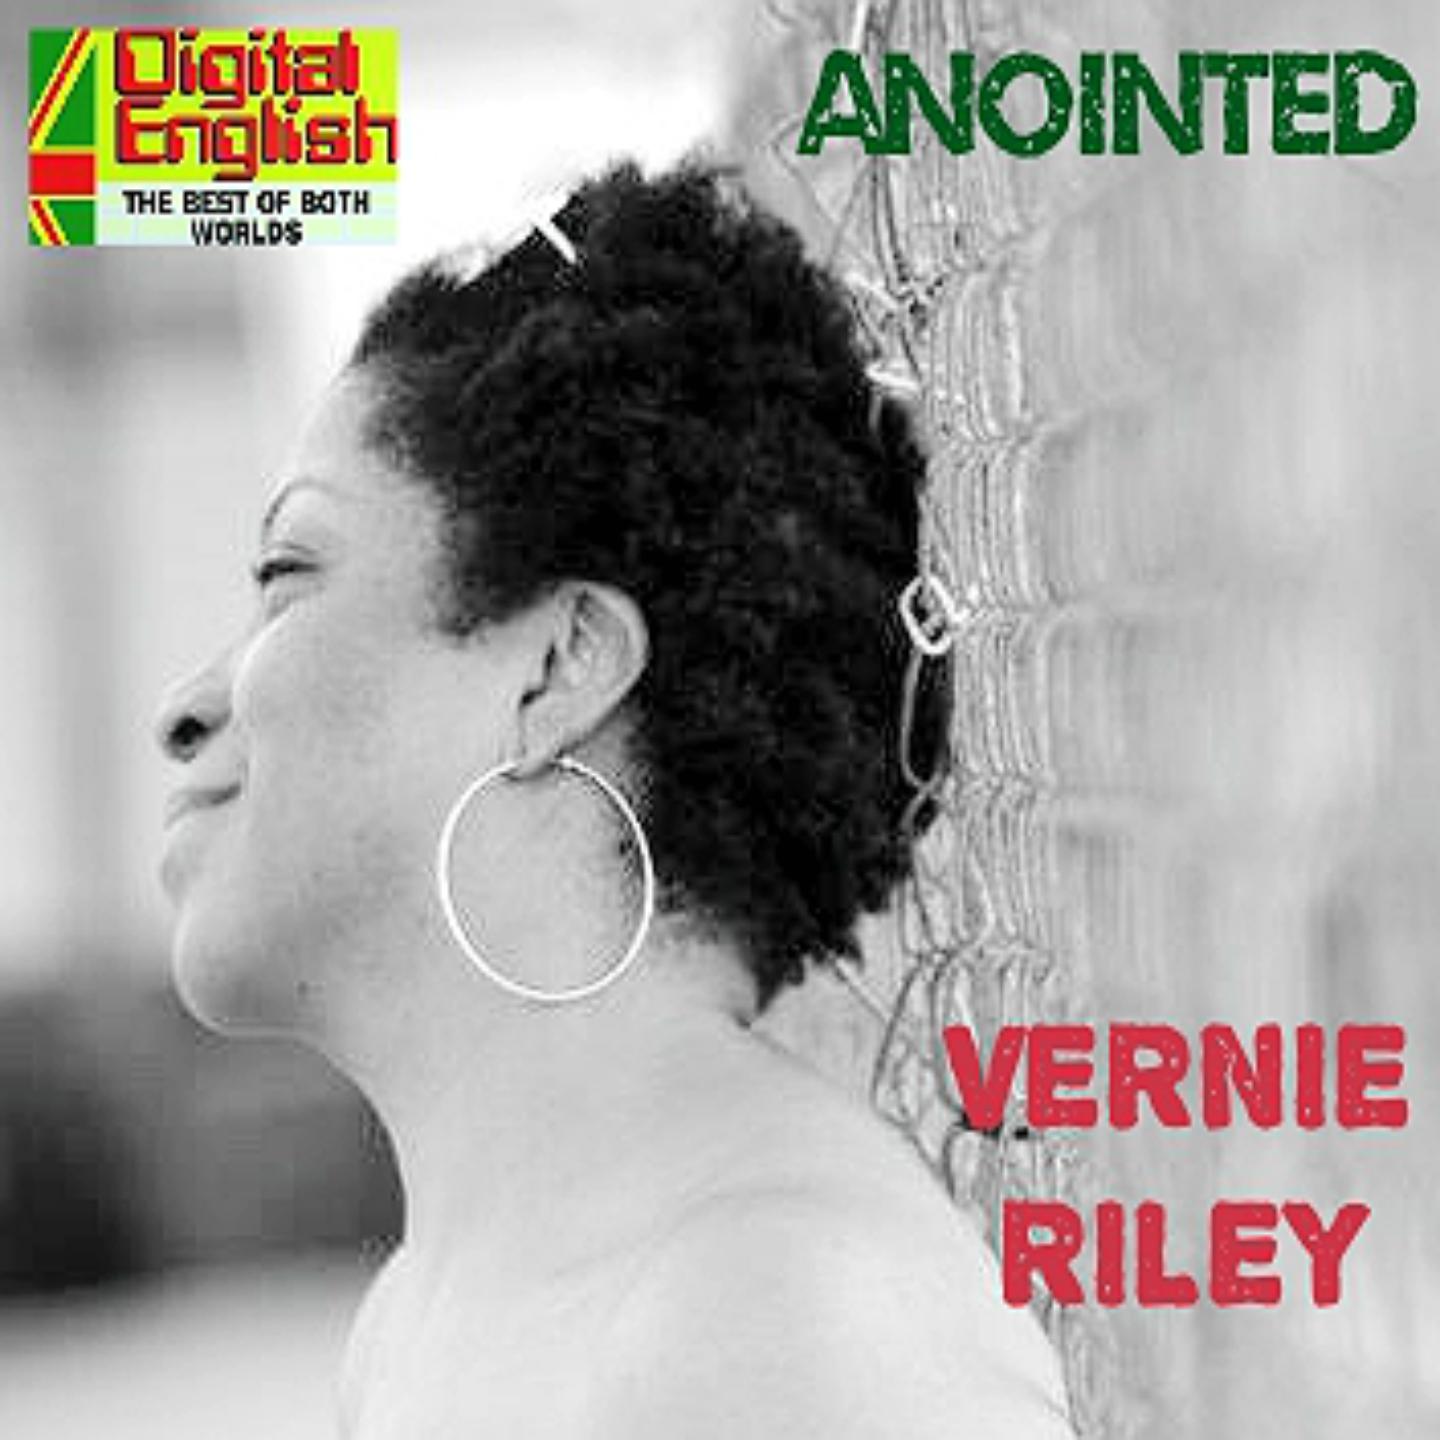 Digital English Presents: Vernie Riley Anointed专辑